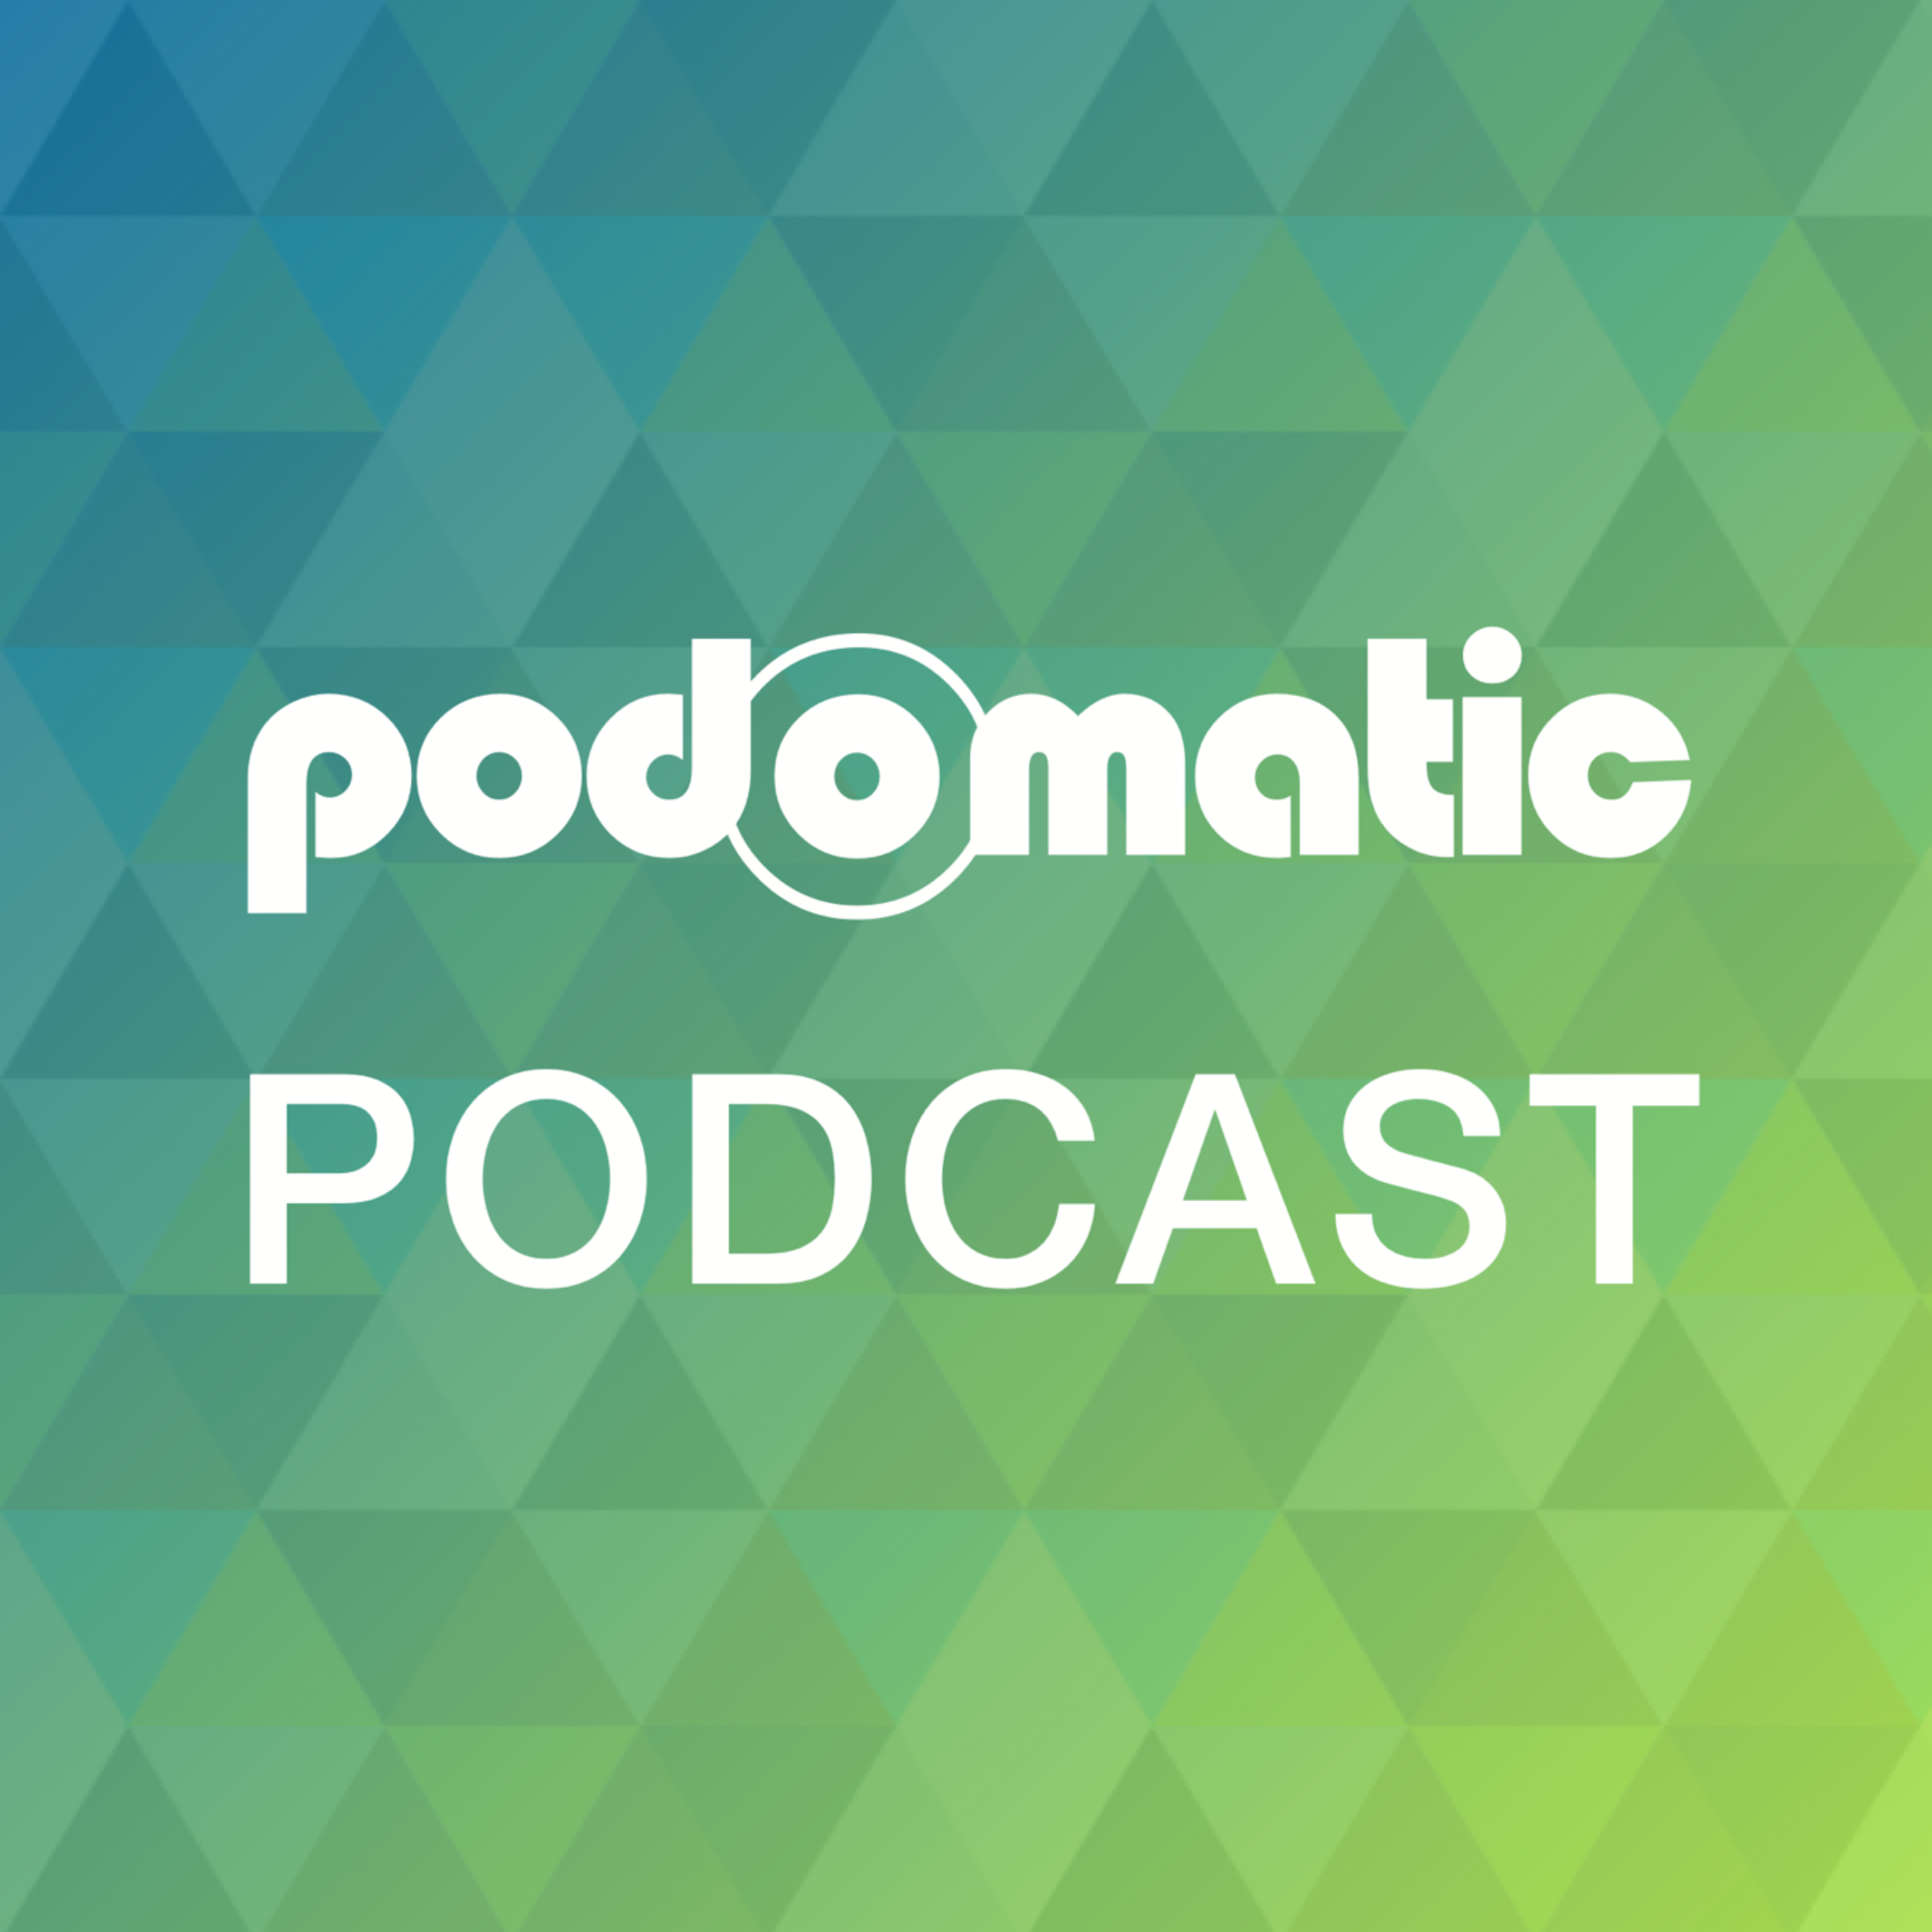 scott adams' Podcast